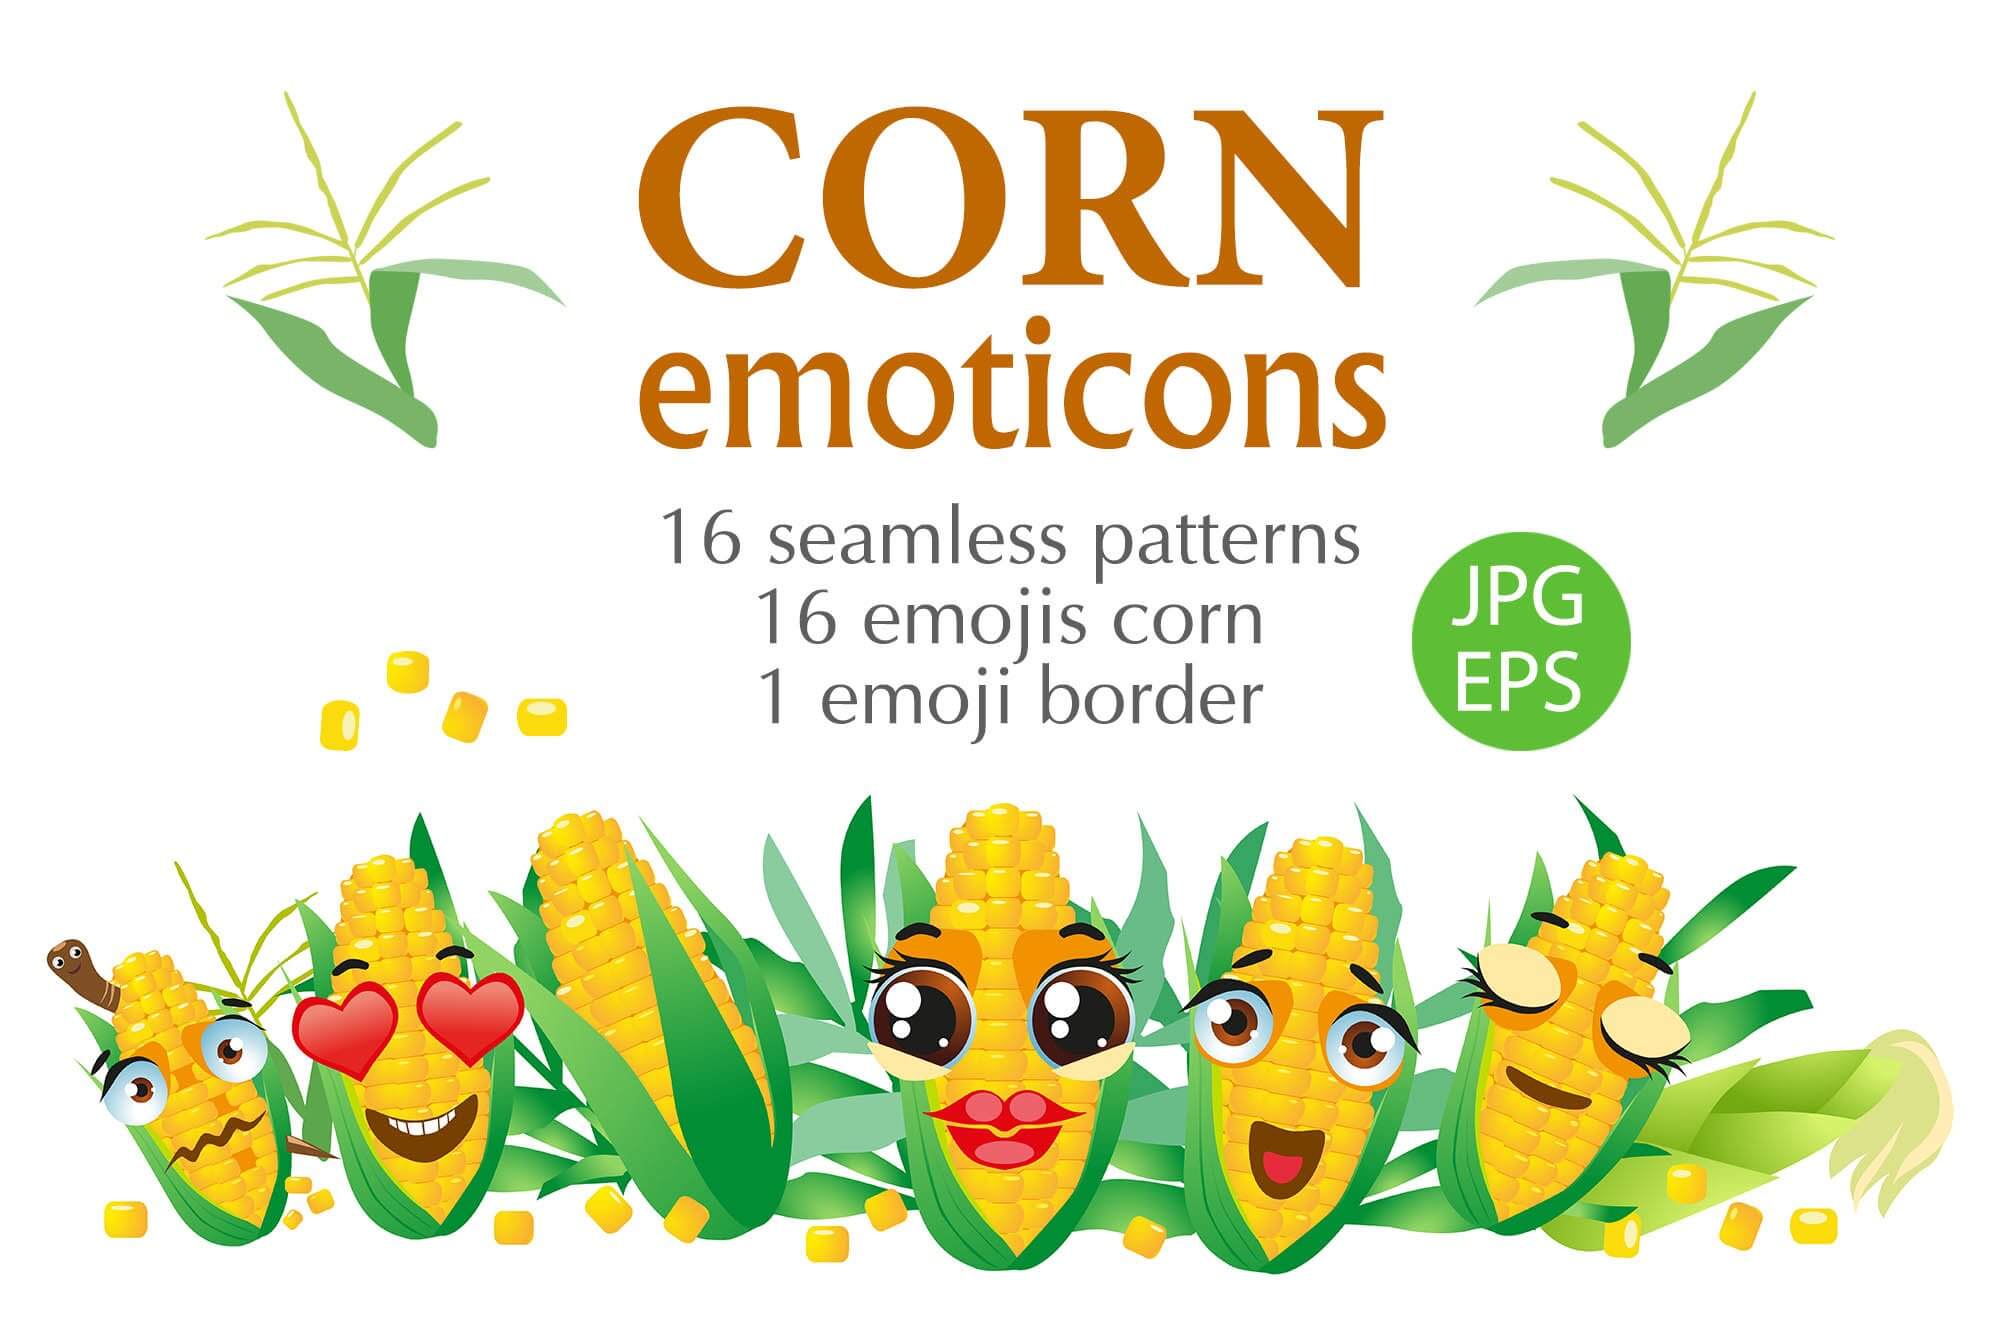 16 seamless patterns of corn emoticons.